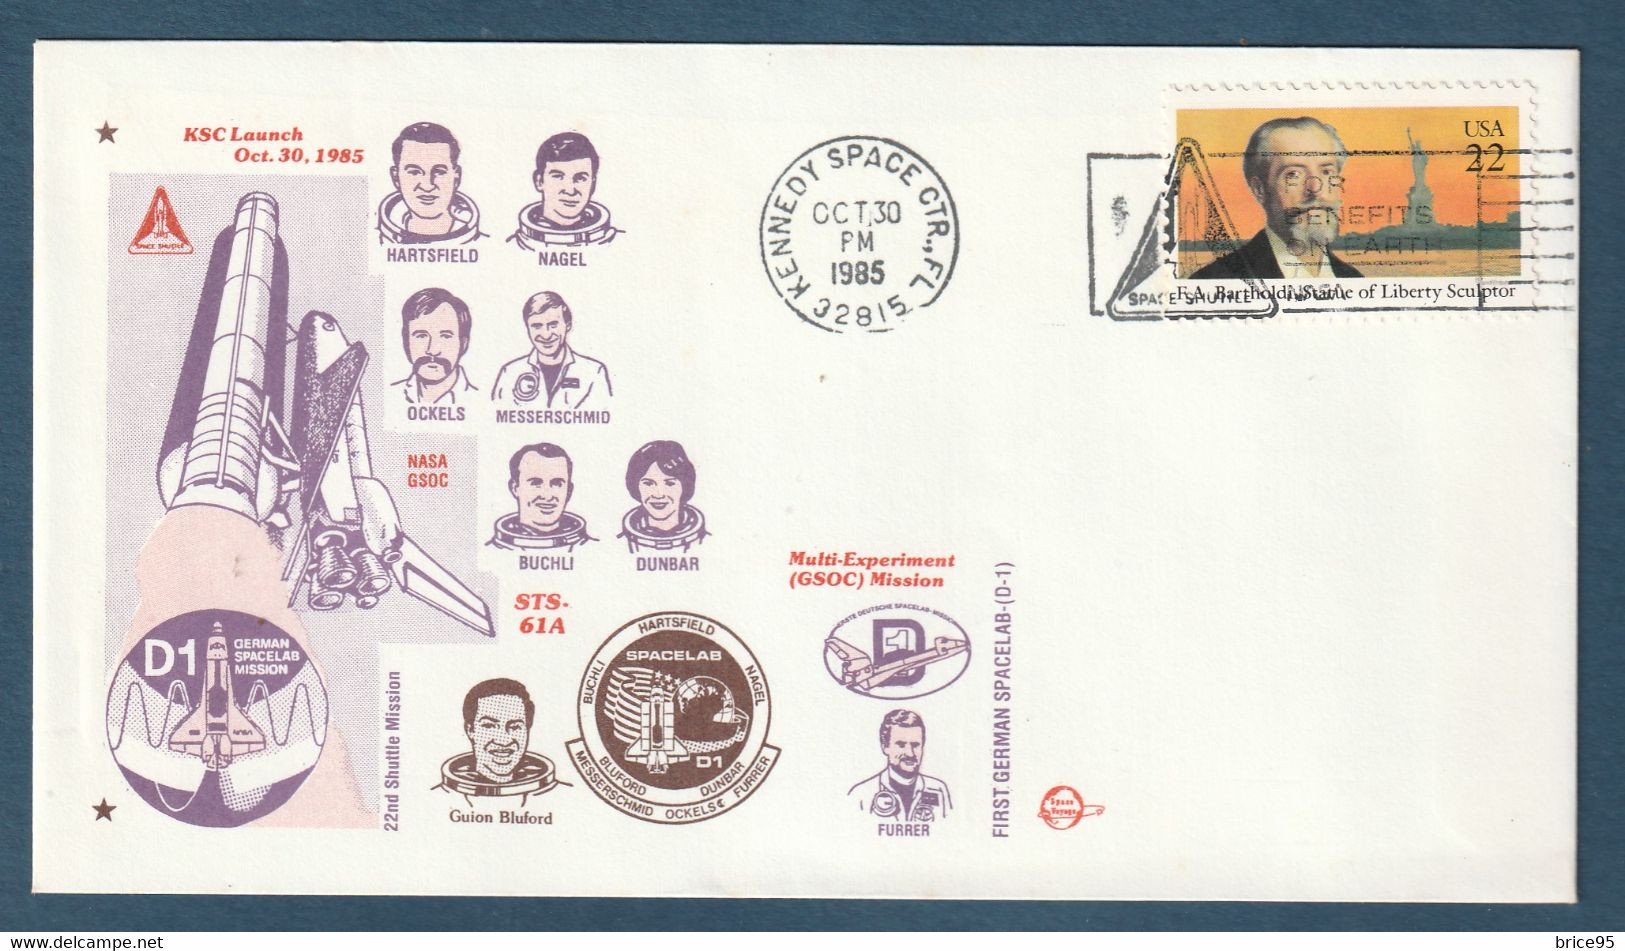 ✈️ Etats Unis - First German - Spacelab - D 1 - Multi Experiment Mission - GSOC - Houston - 1985 ✈️ - Noord-Amerika